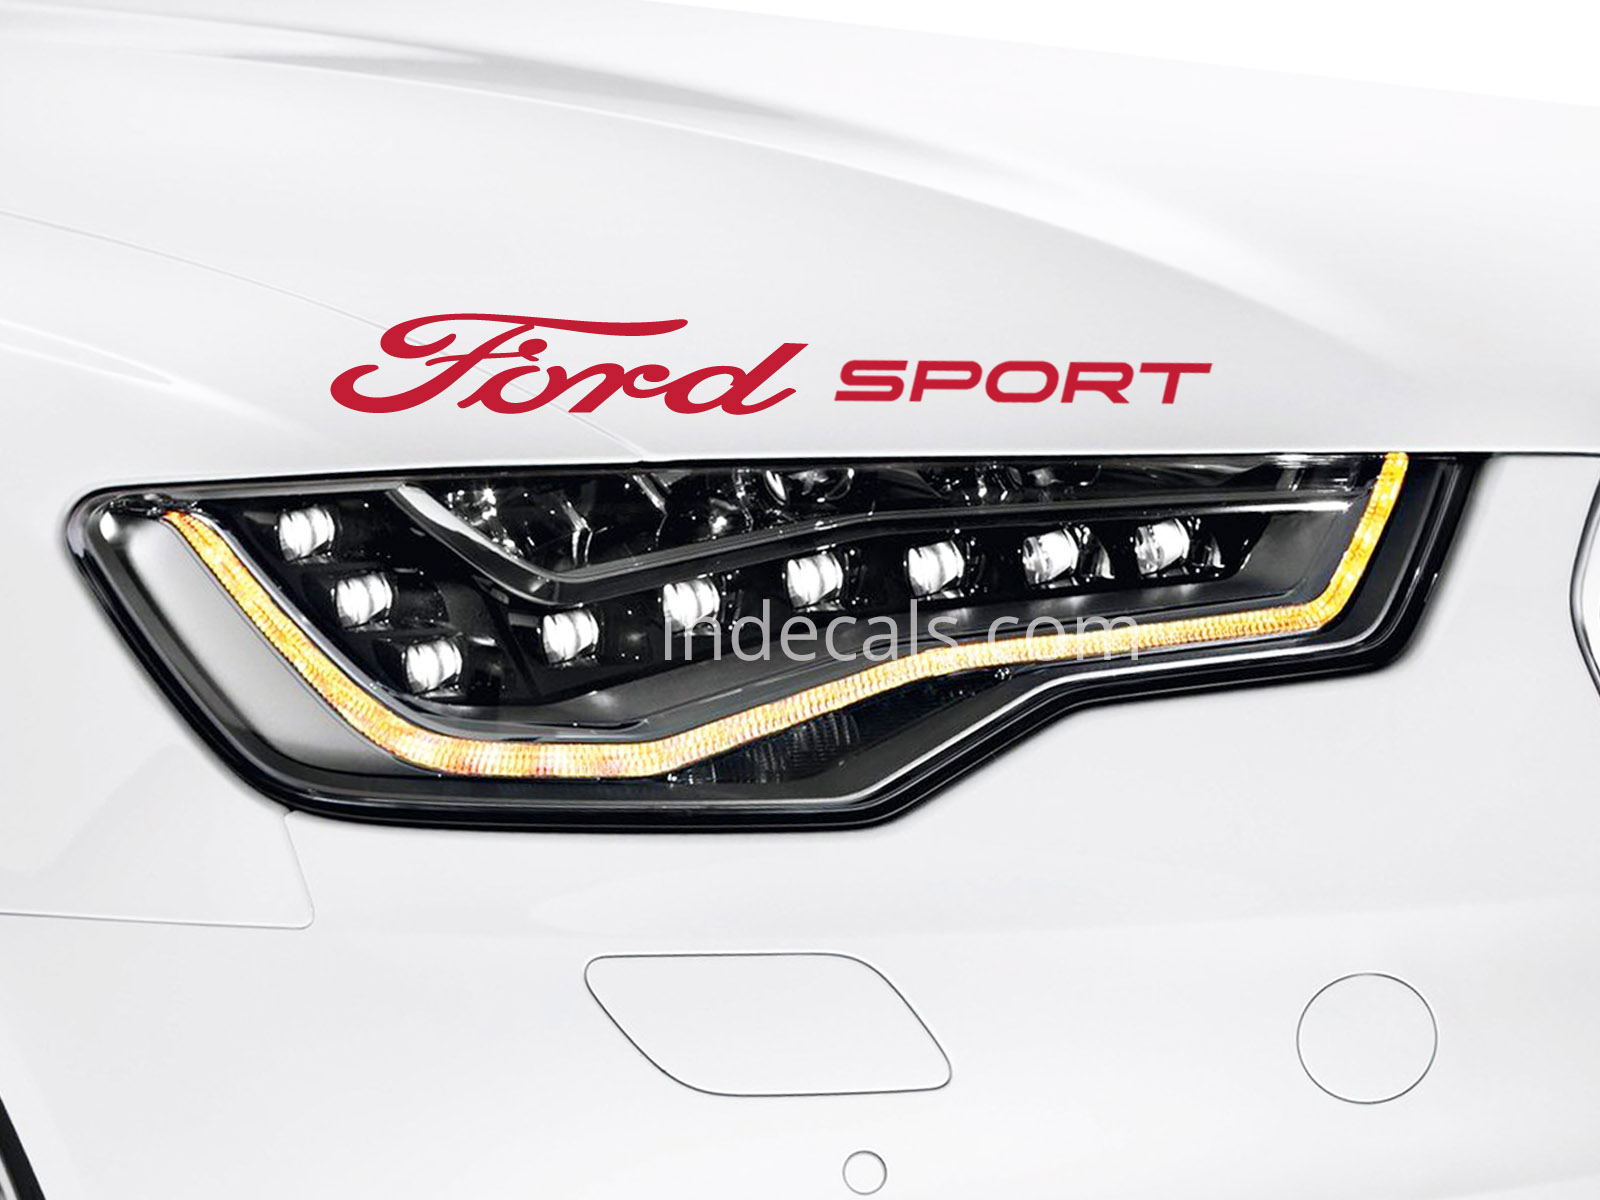 1 x Ford Sport Sticker - Red